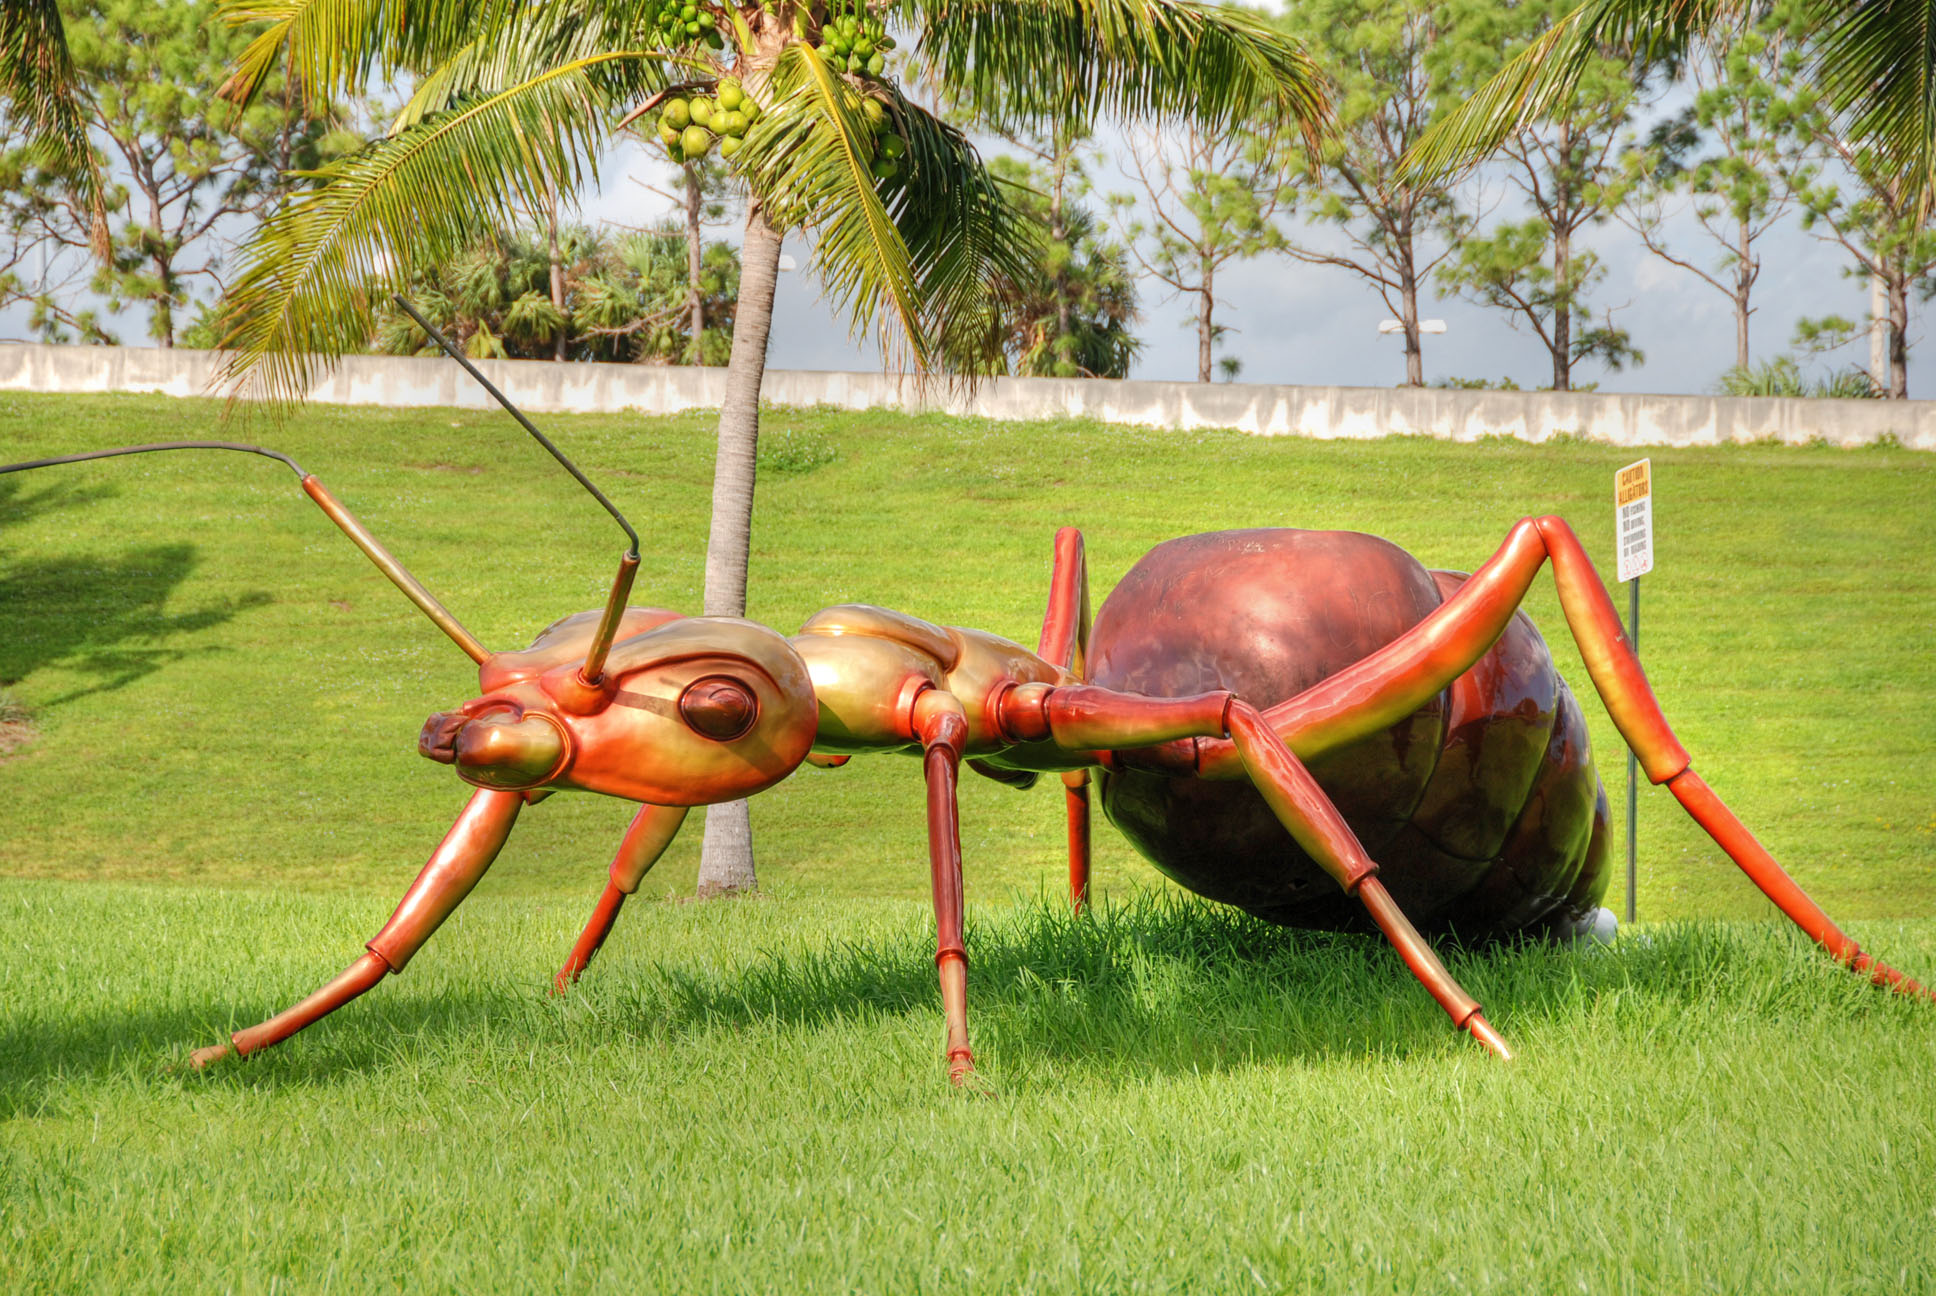 Giant ant, west palm beach, florida, jan photo